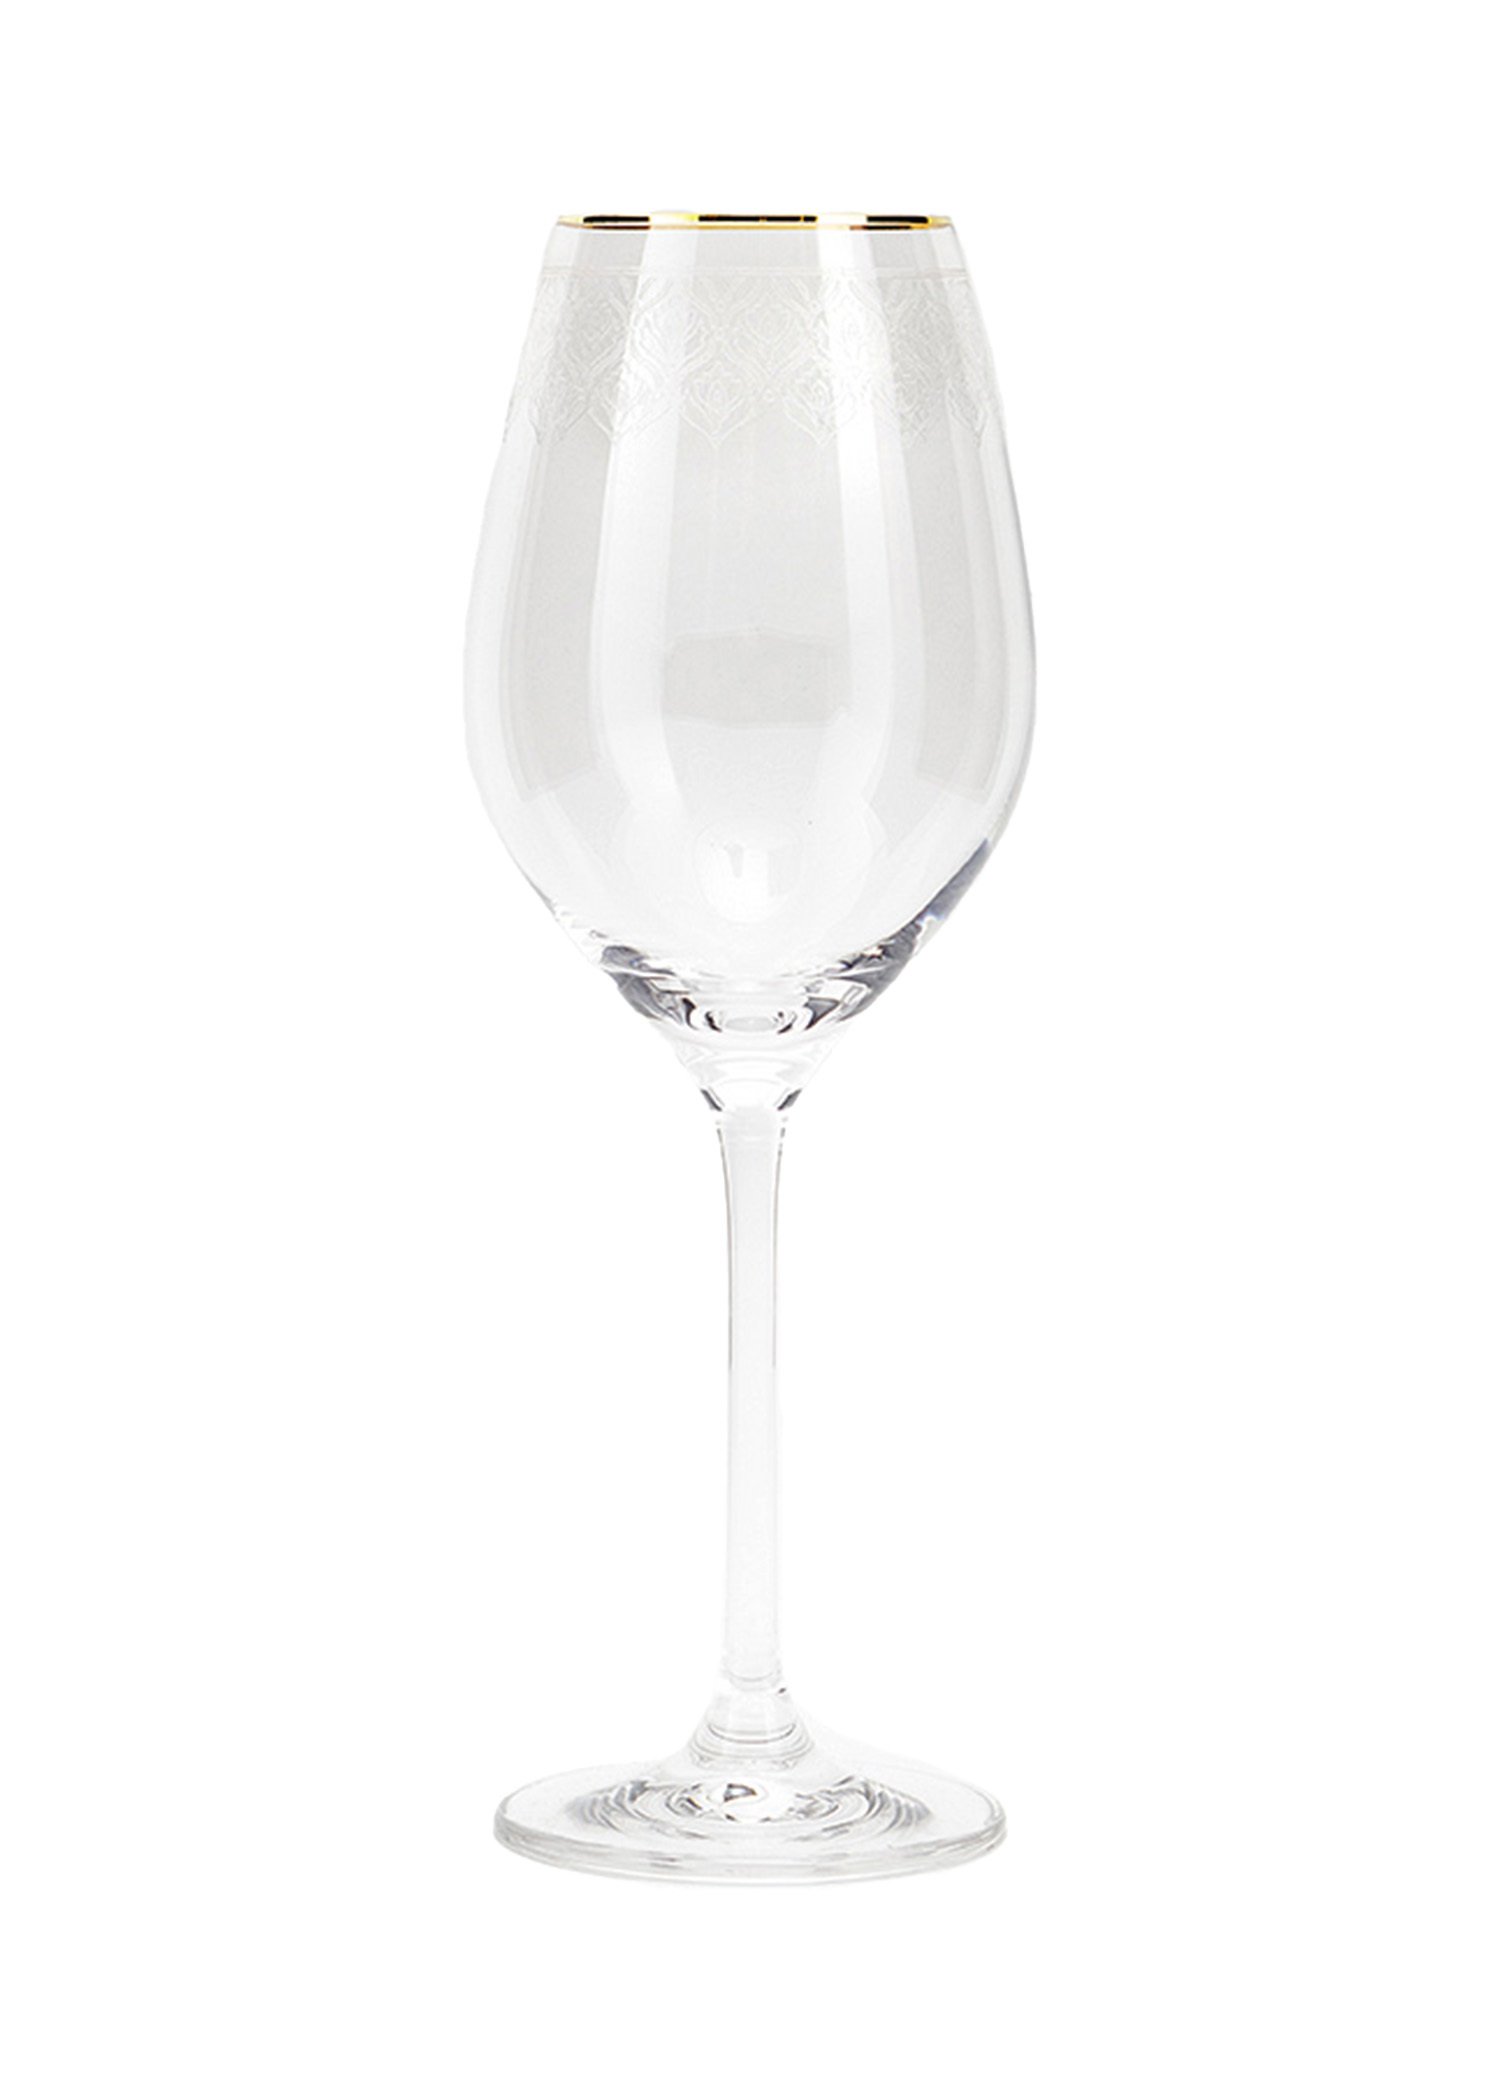 White wine crystal glass